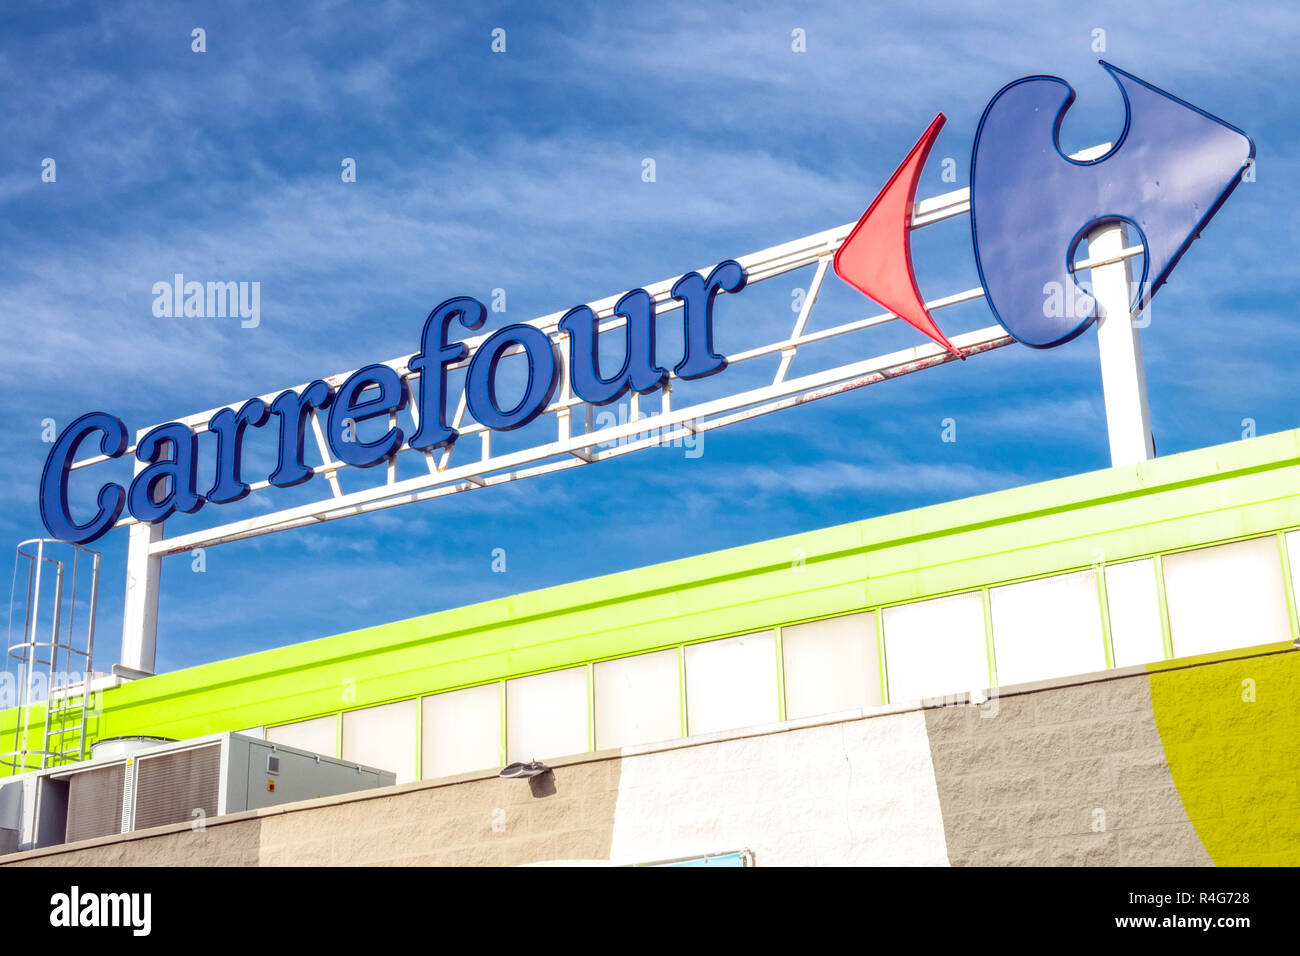 Carrefour logo, Spain Stock Photo